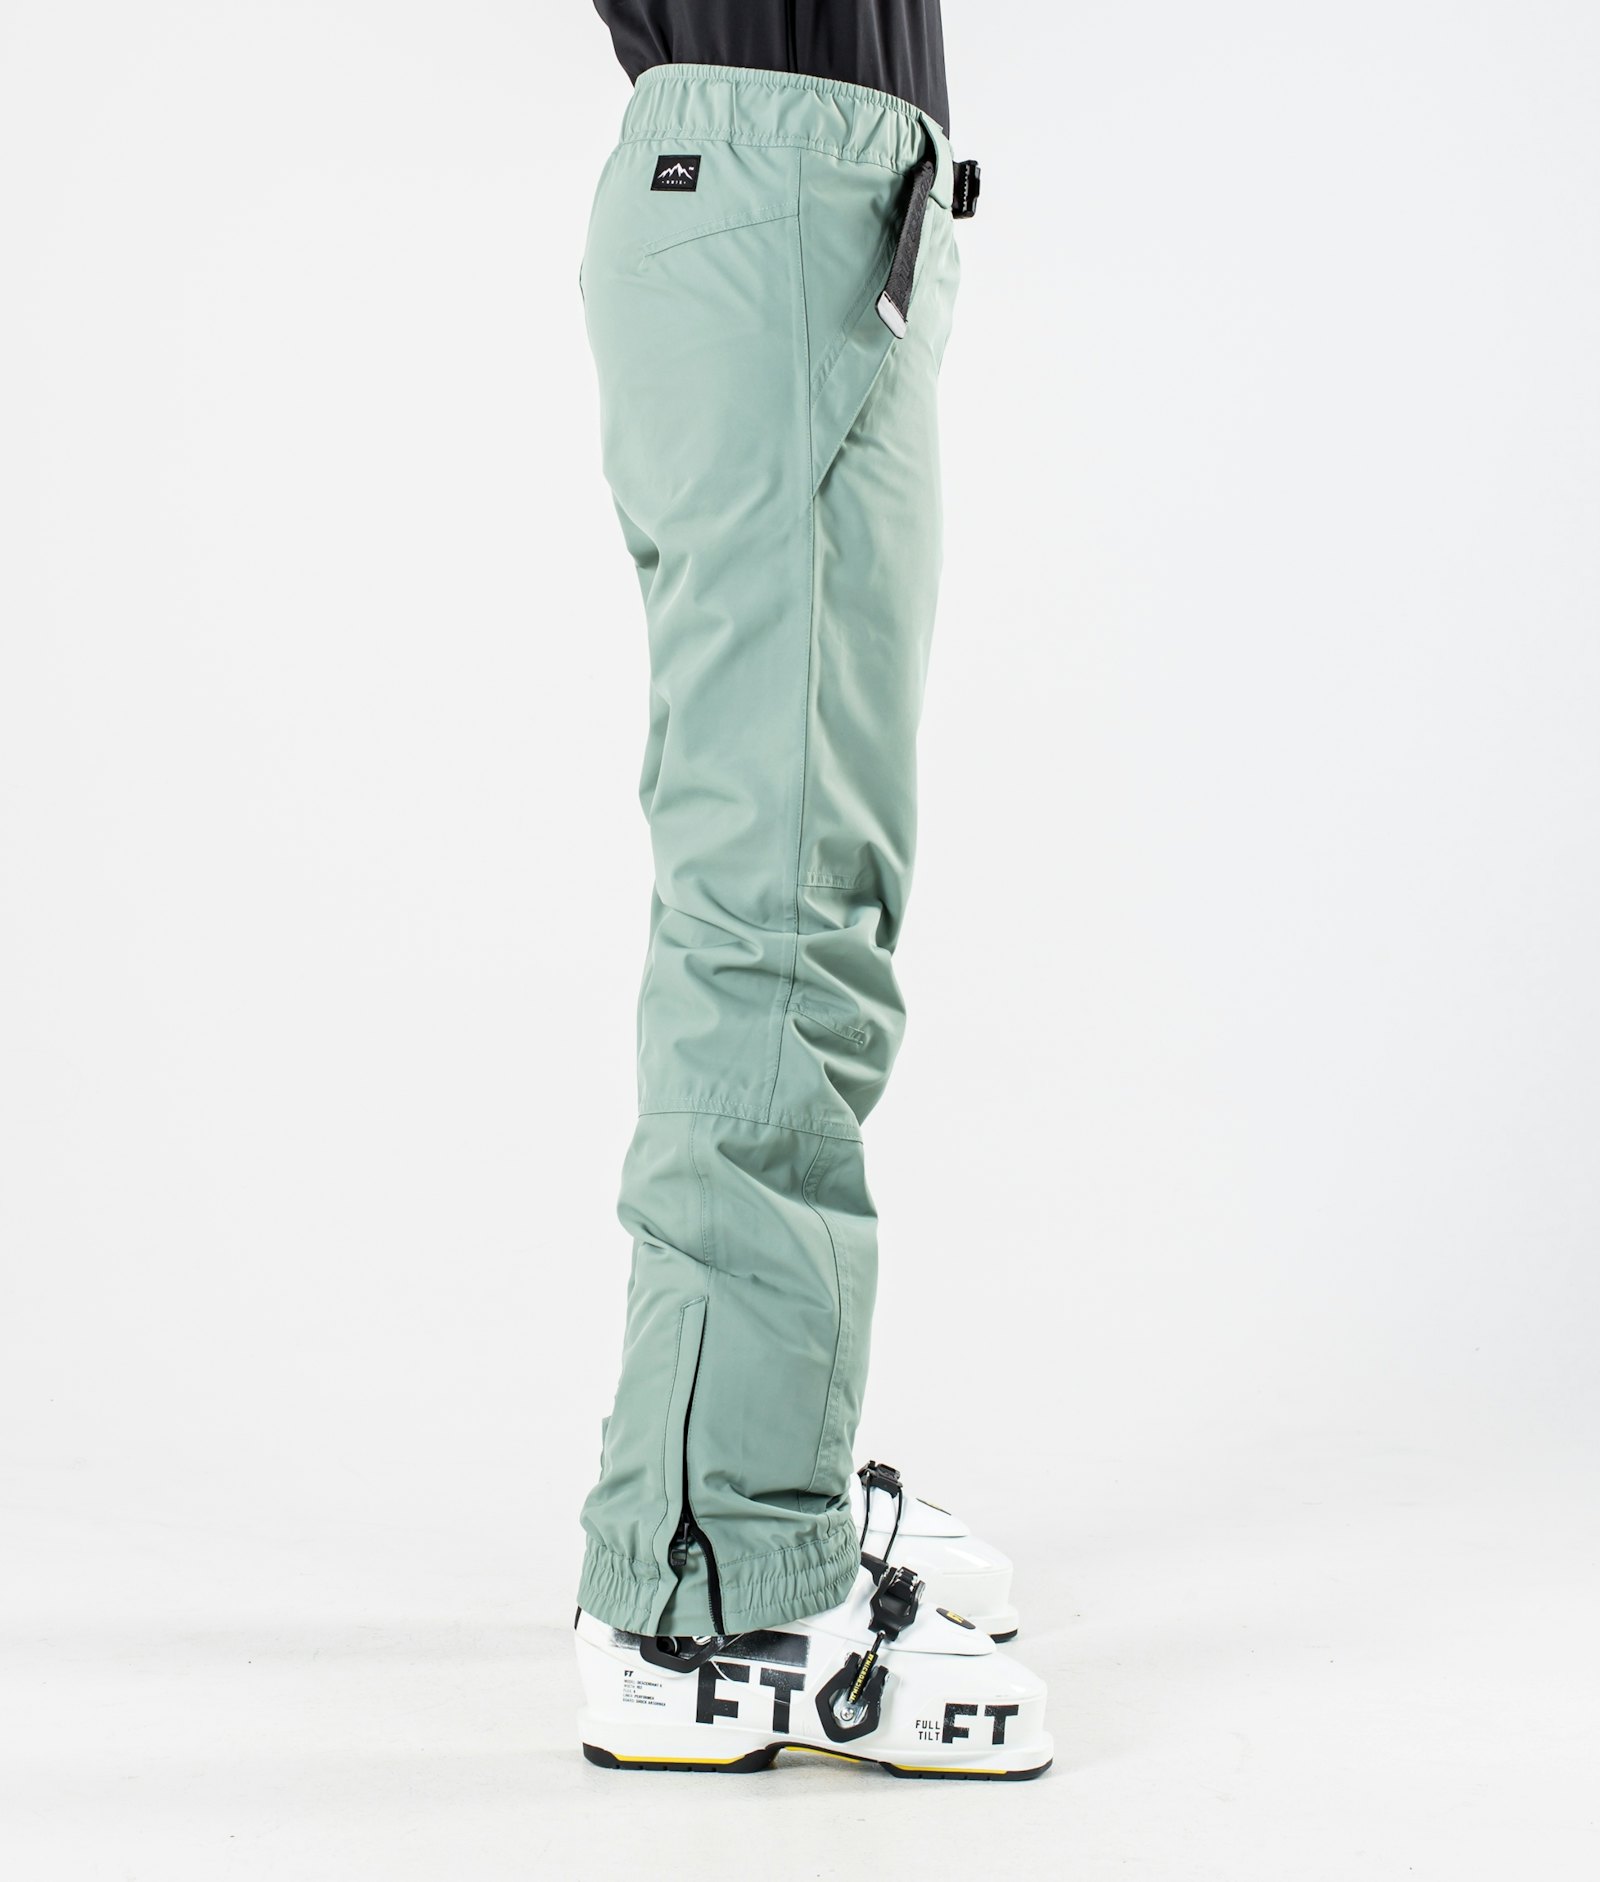 Blizzard W 2020 Pantalon de Ski Femme Faded Green